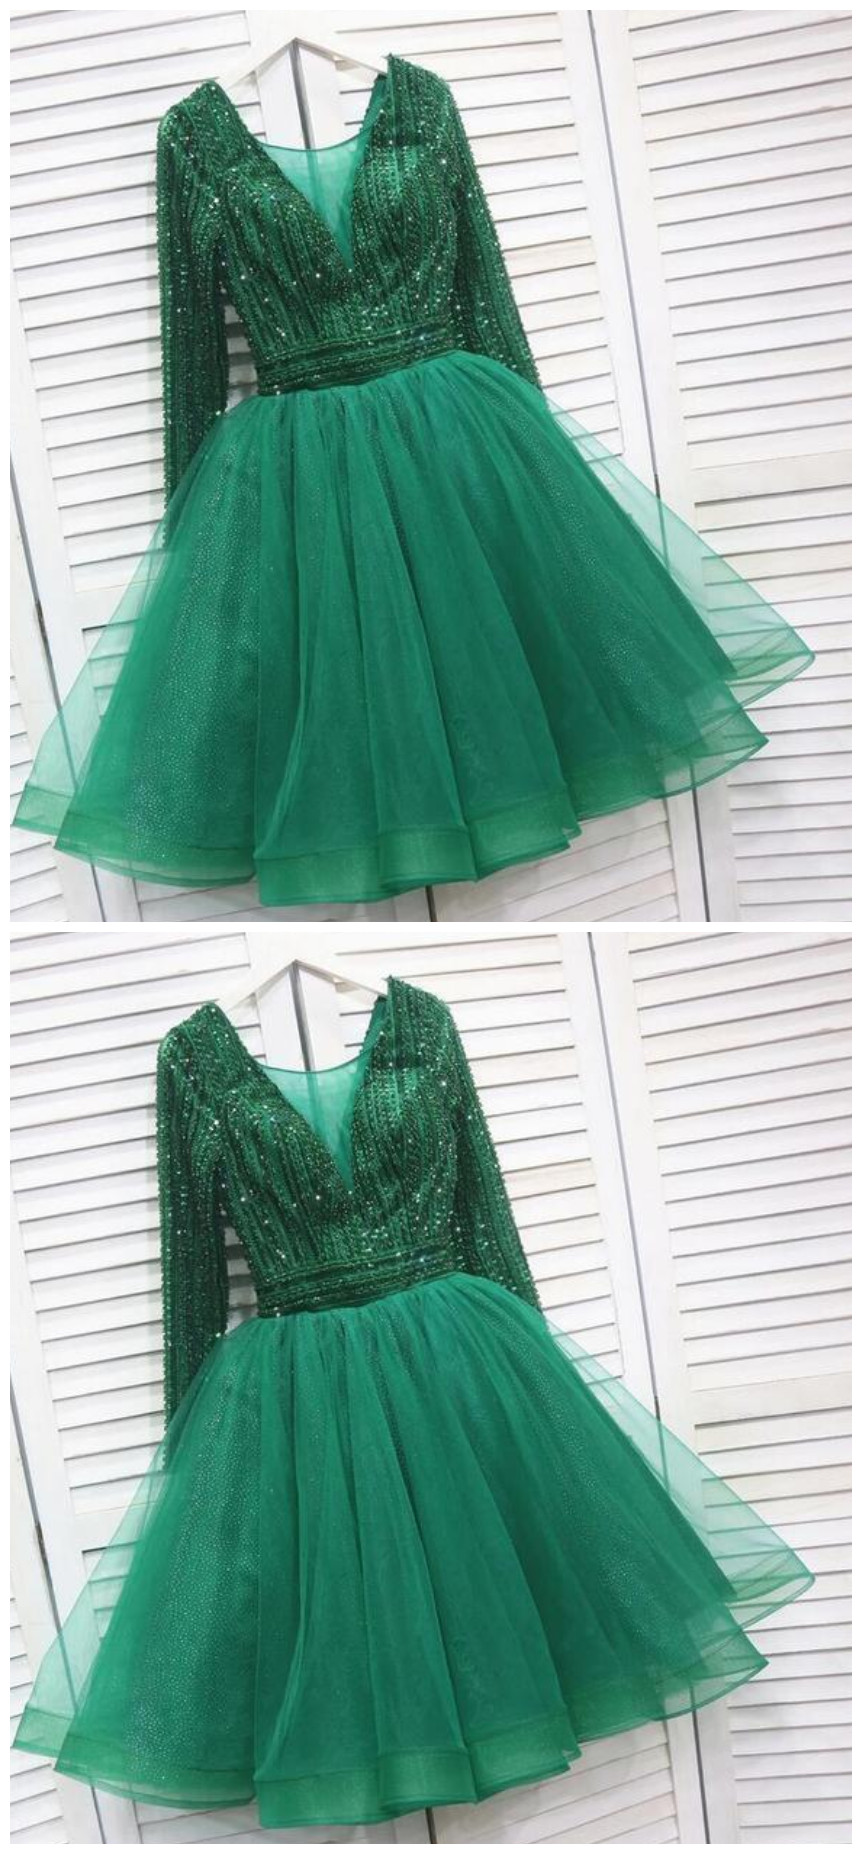 Sassy Wedding Sparkly Tulle Emerald Green Short Homecoming Dress, Beaded Prom Dress